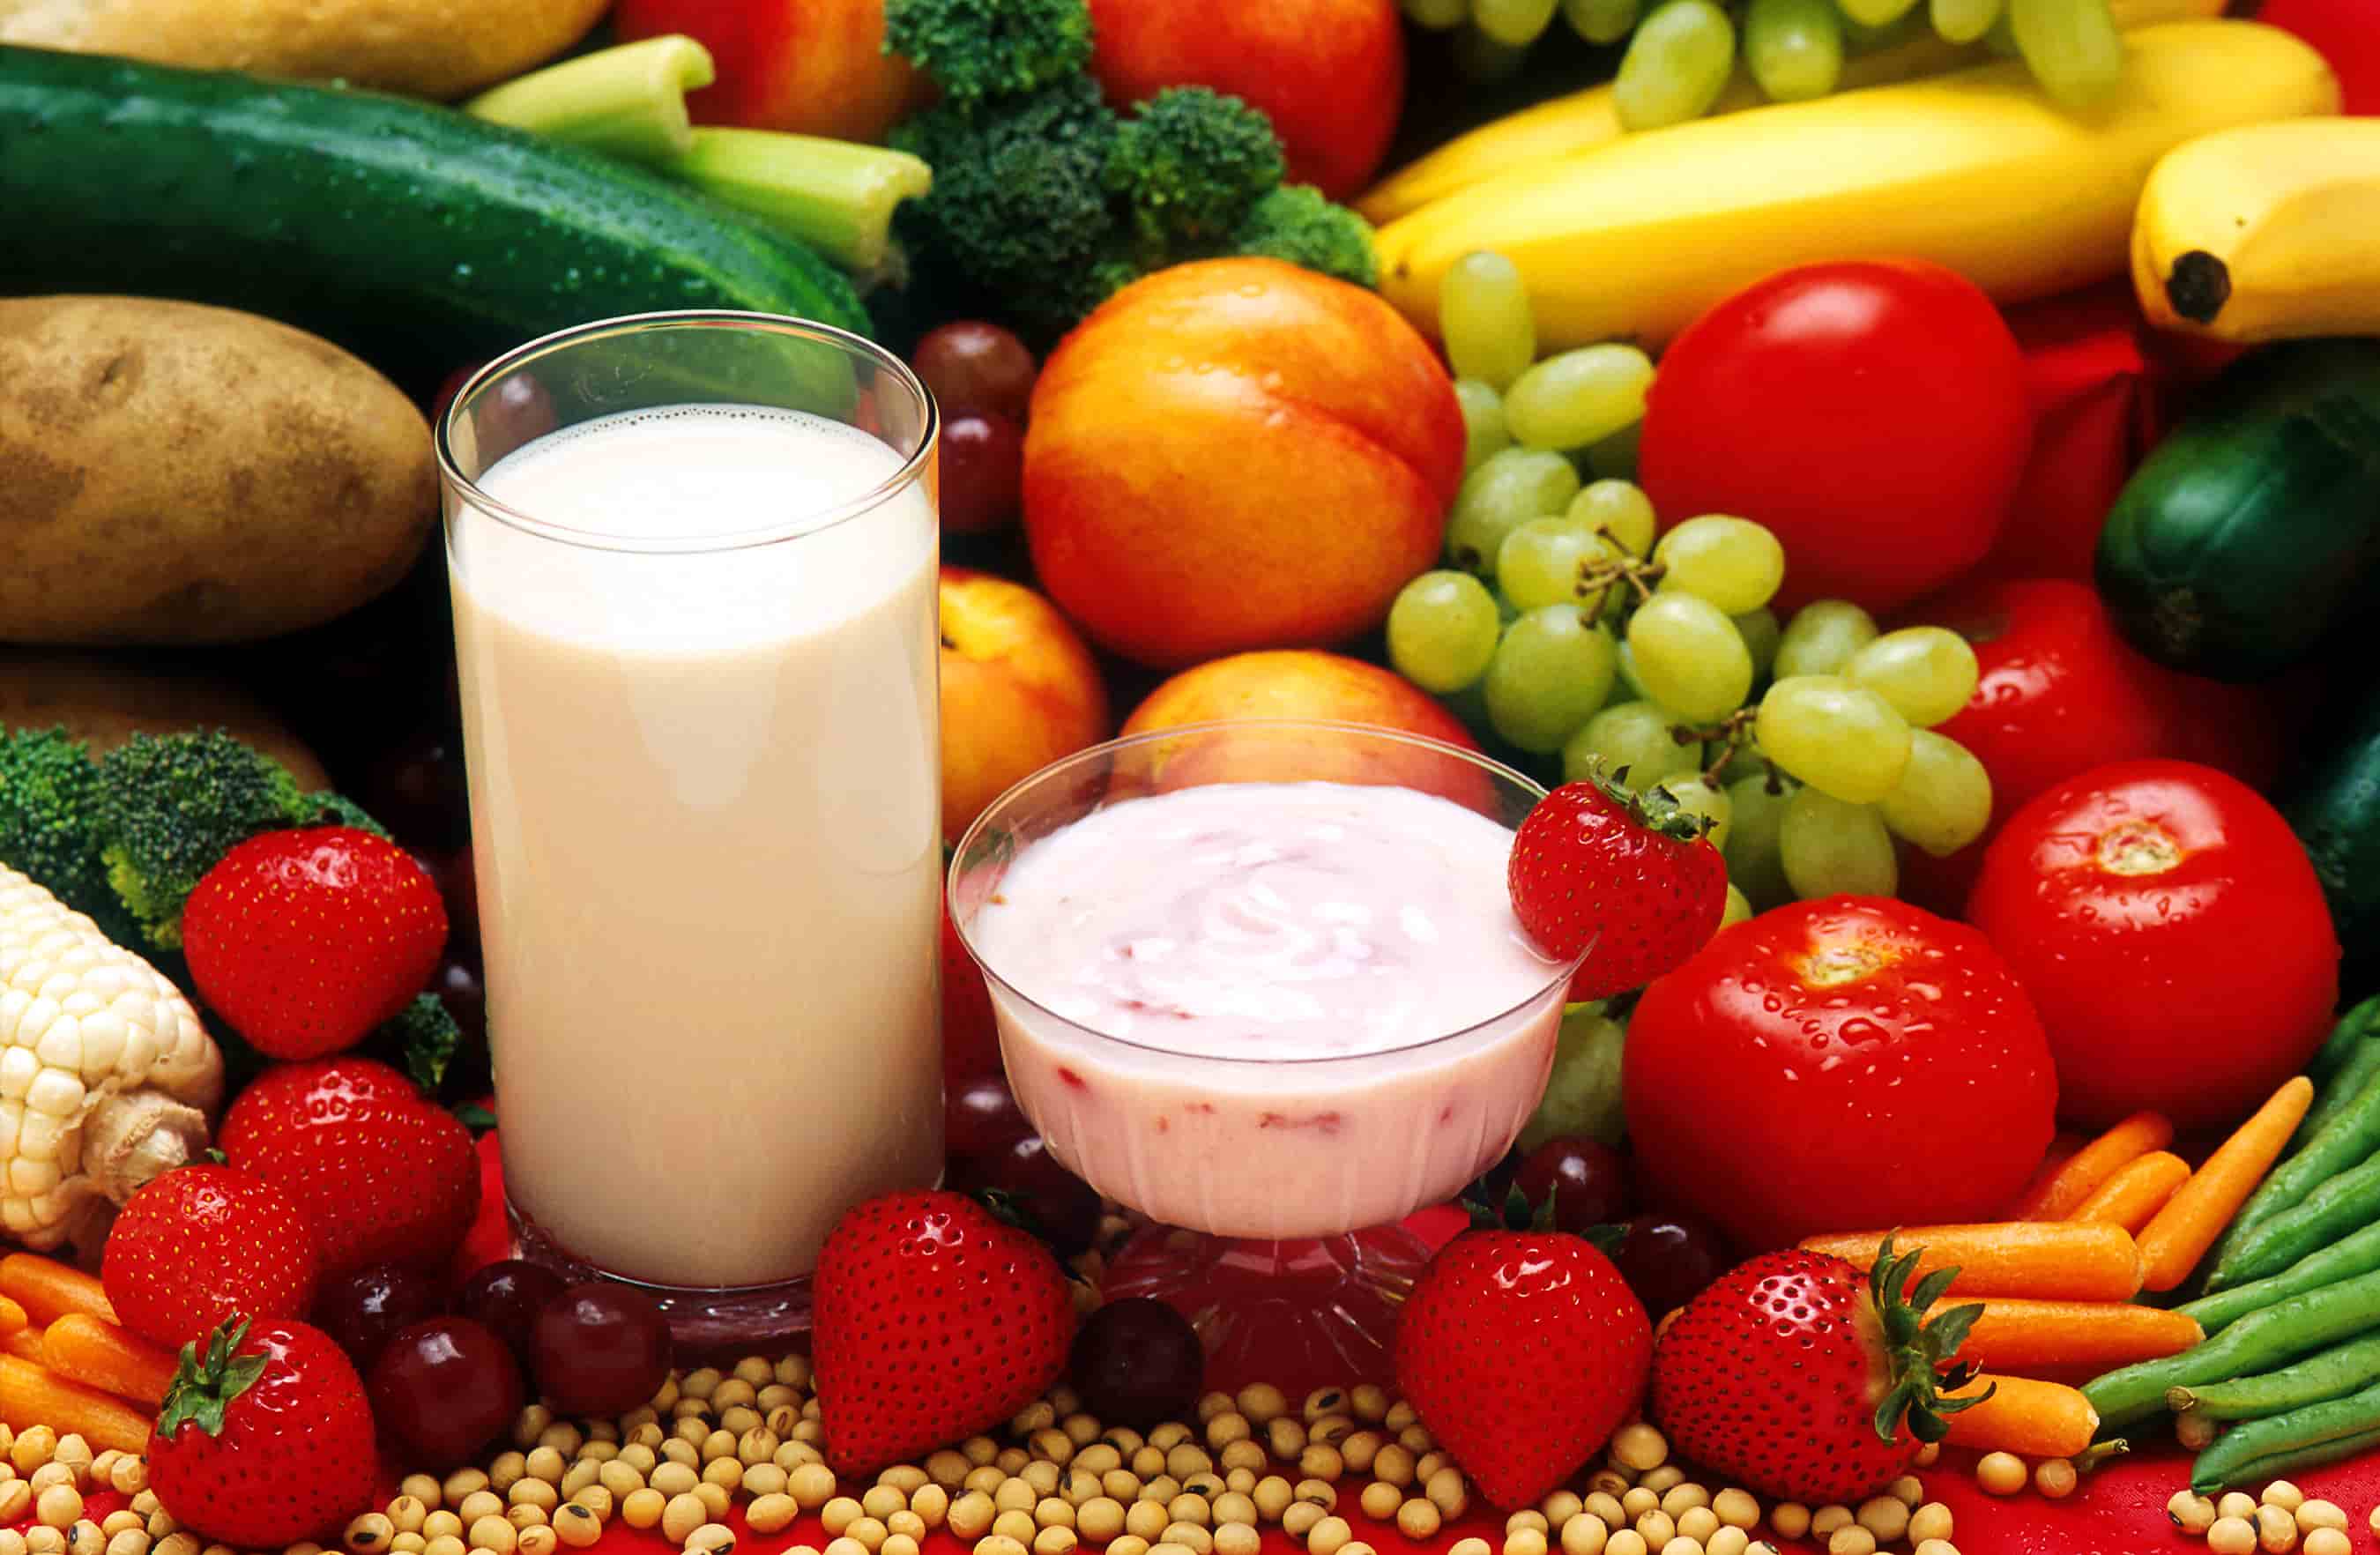 fruits and vegetables for hypothyroidism diet || fruits and vegetables for hypothyroidism diet